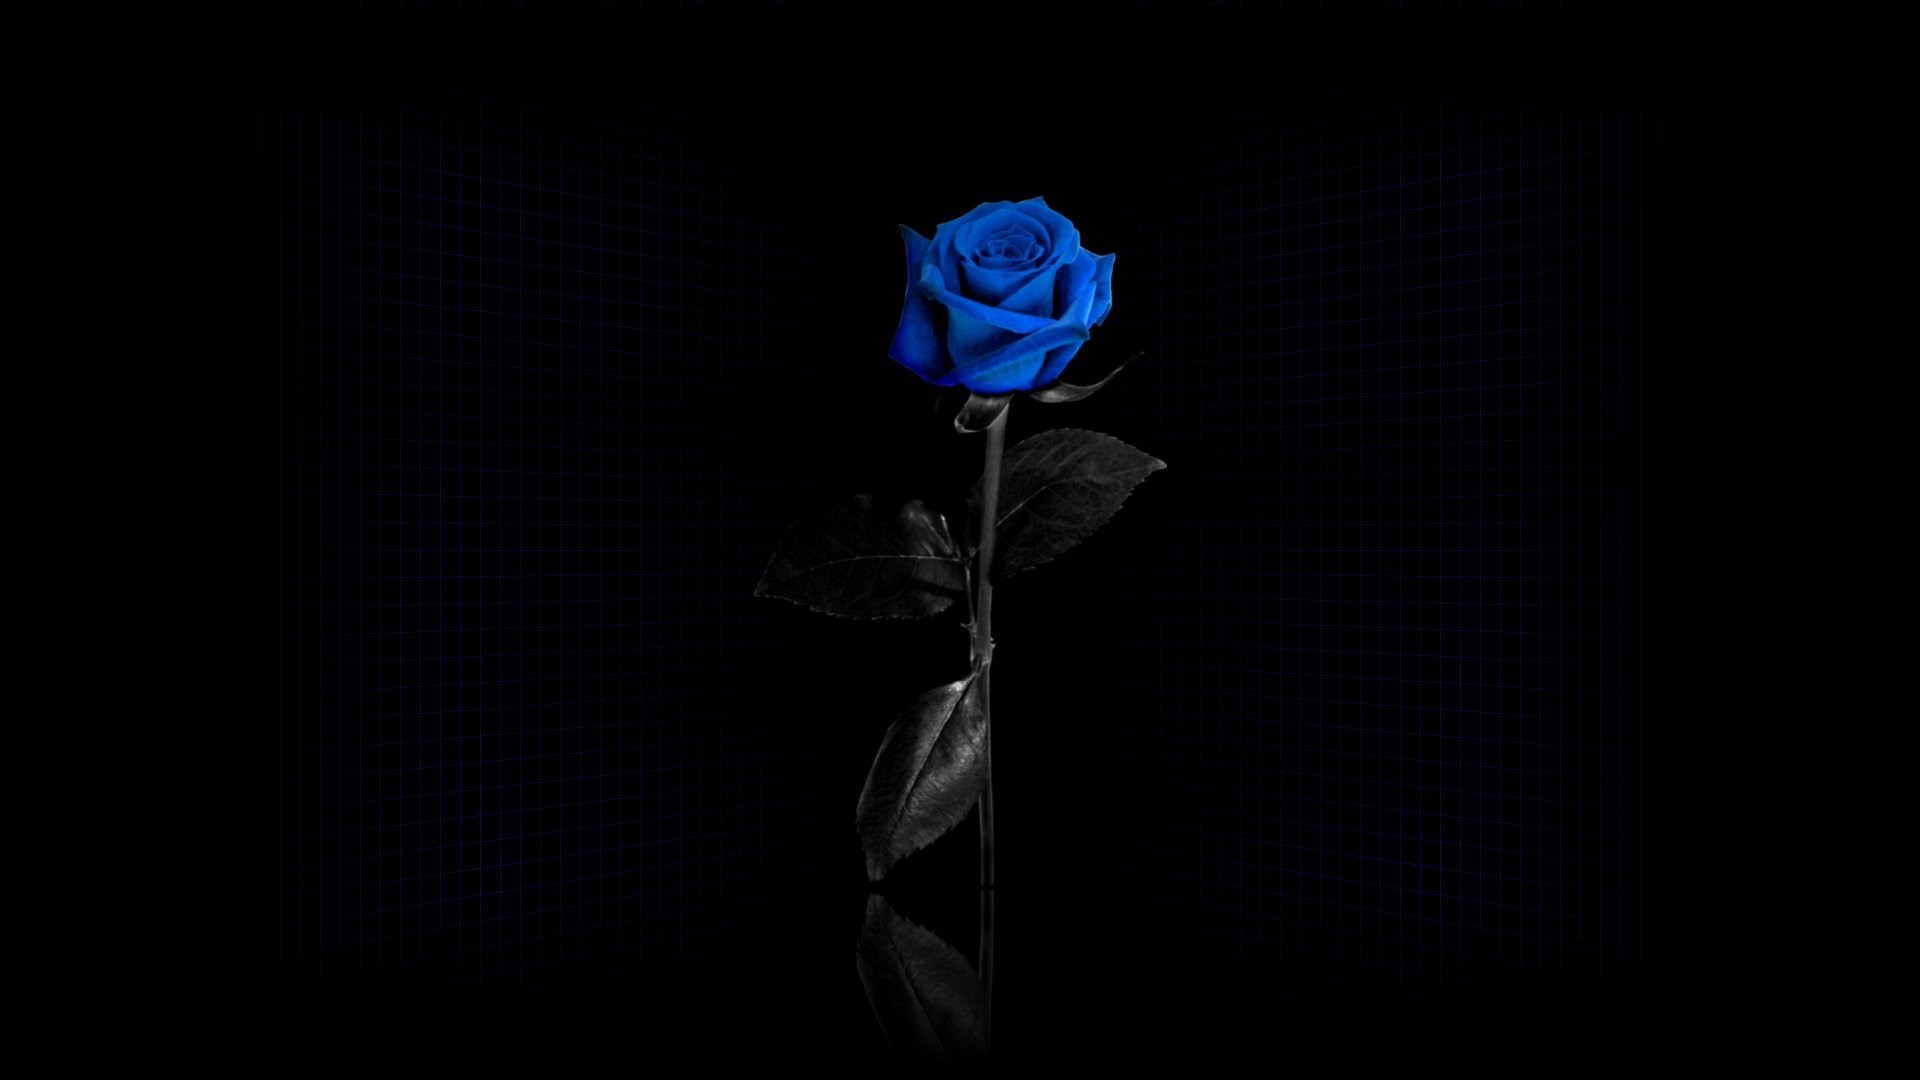 1920x1080 Blue Rose flower on Black Background hd wallpaper by kyouko